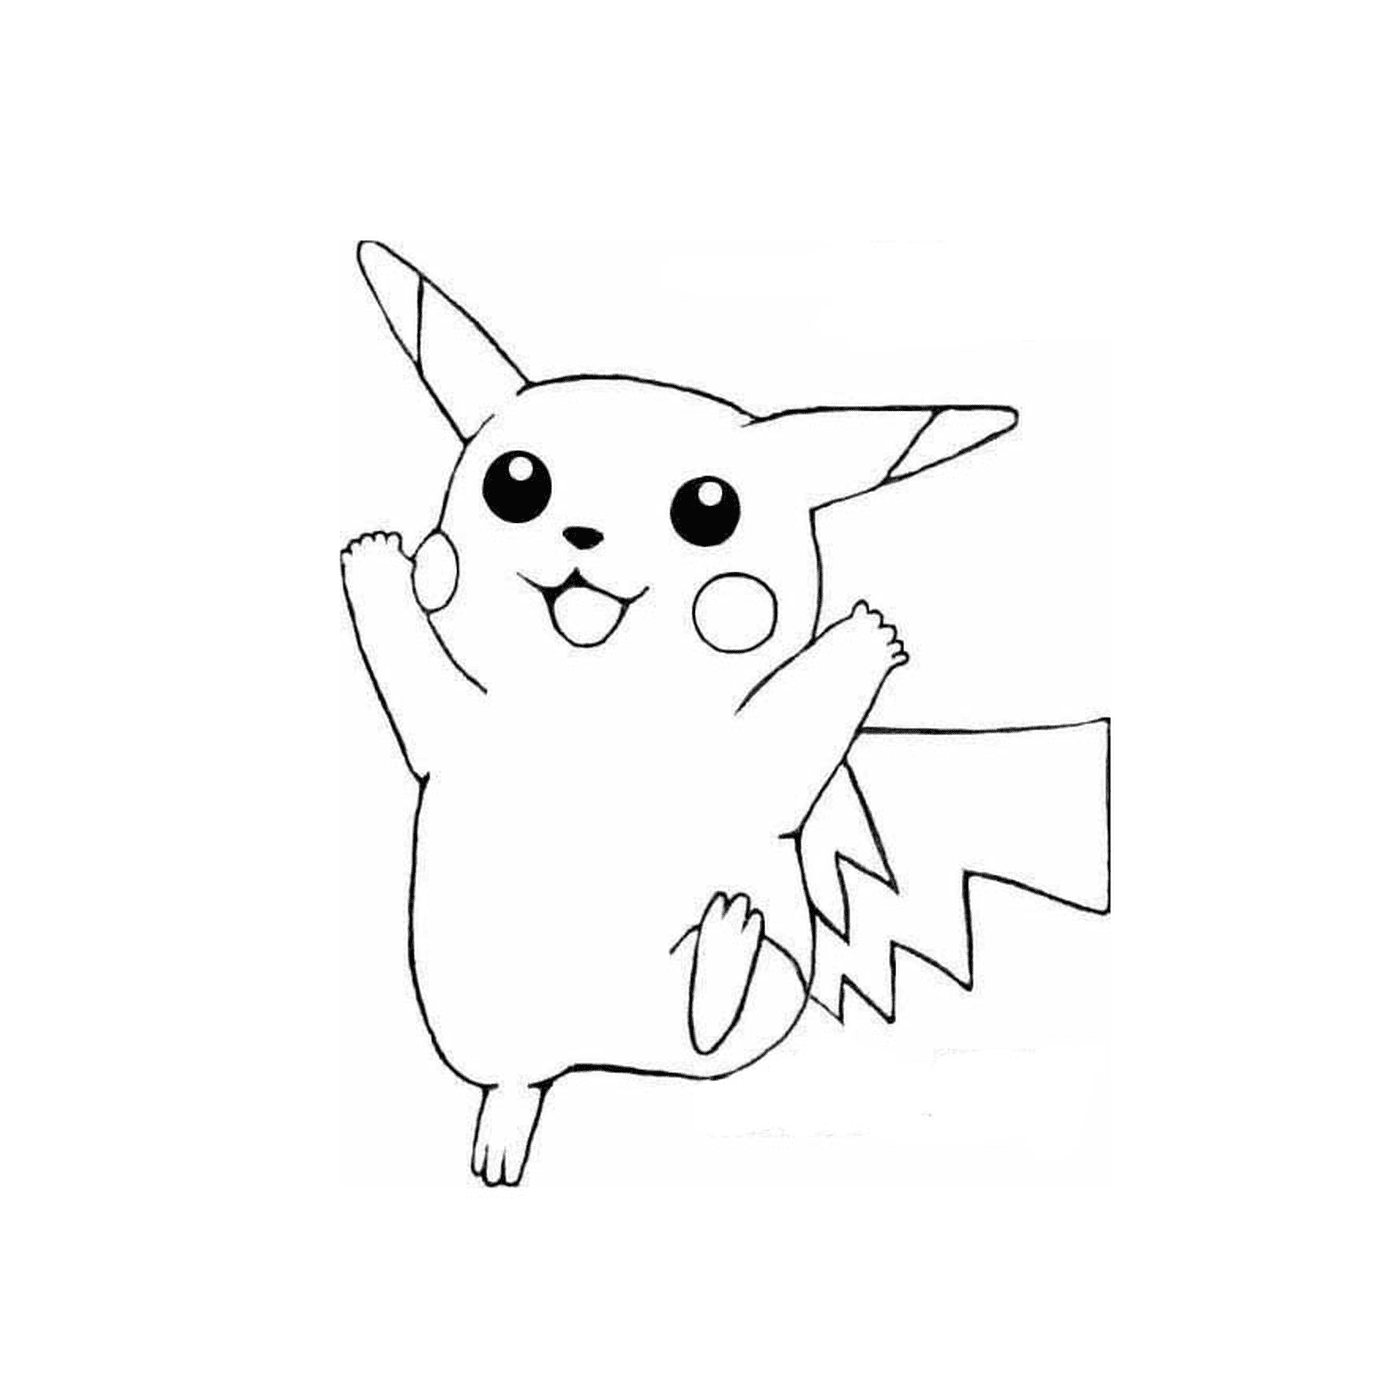   Pikachu en version facile à dessiner 